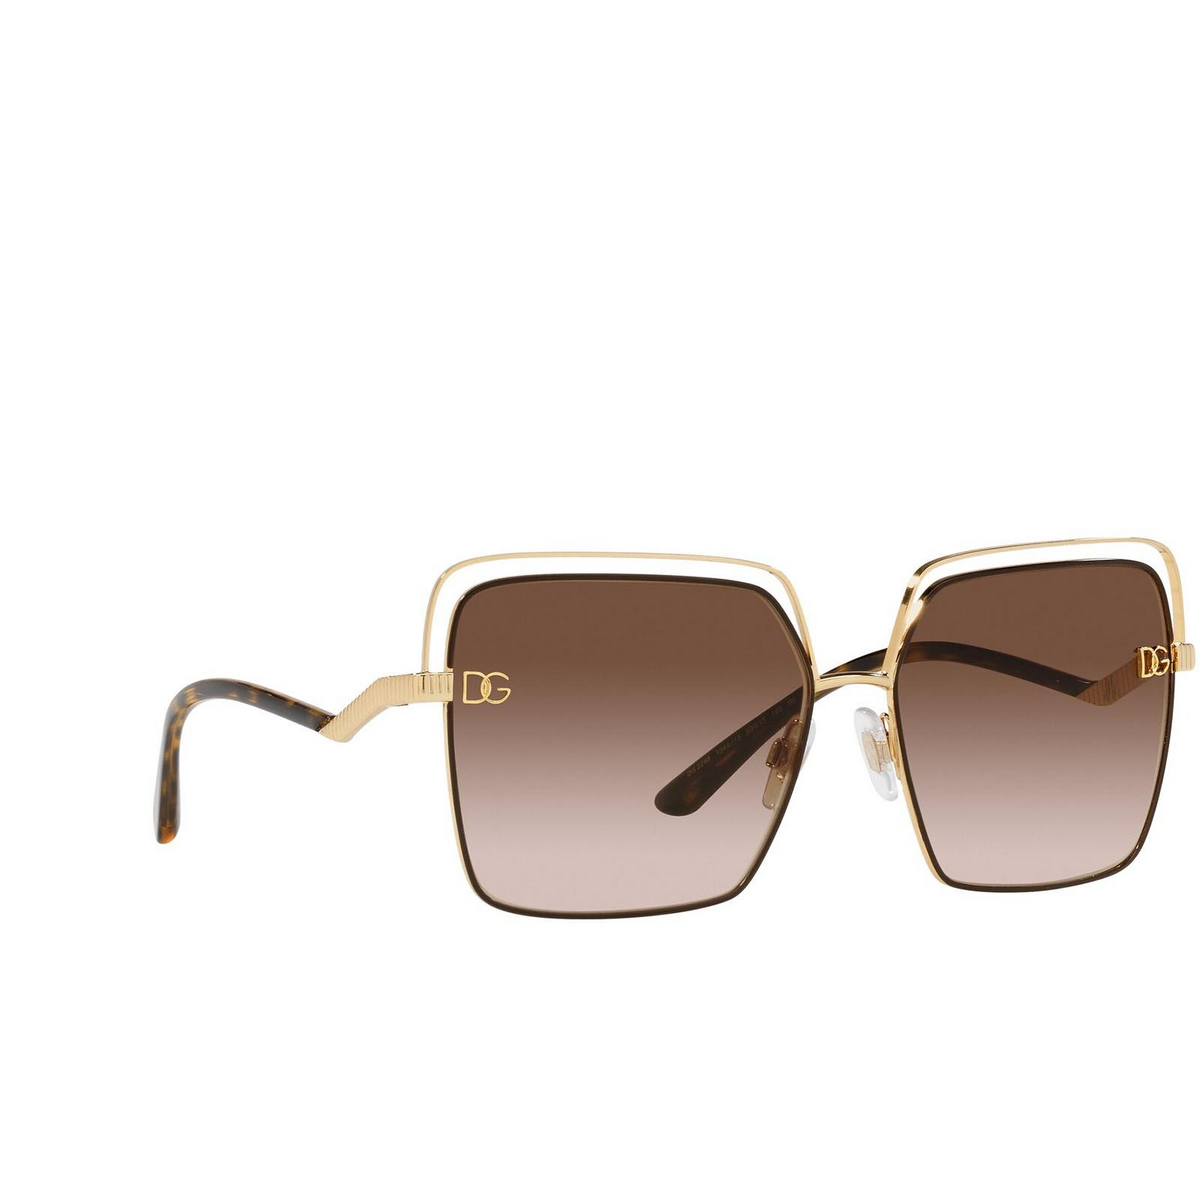 Dolce & Gabbana® Square Sunglasses: DG2268 color Gold/brown 134413 - three-quarters view.